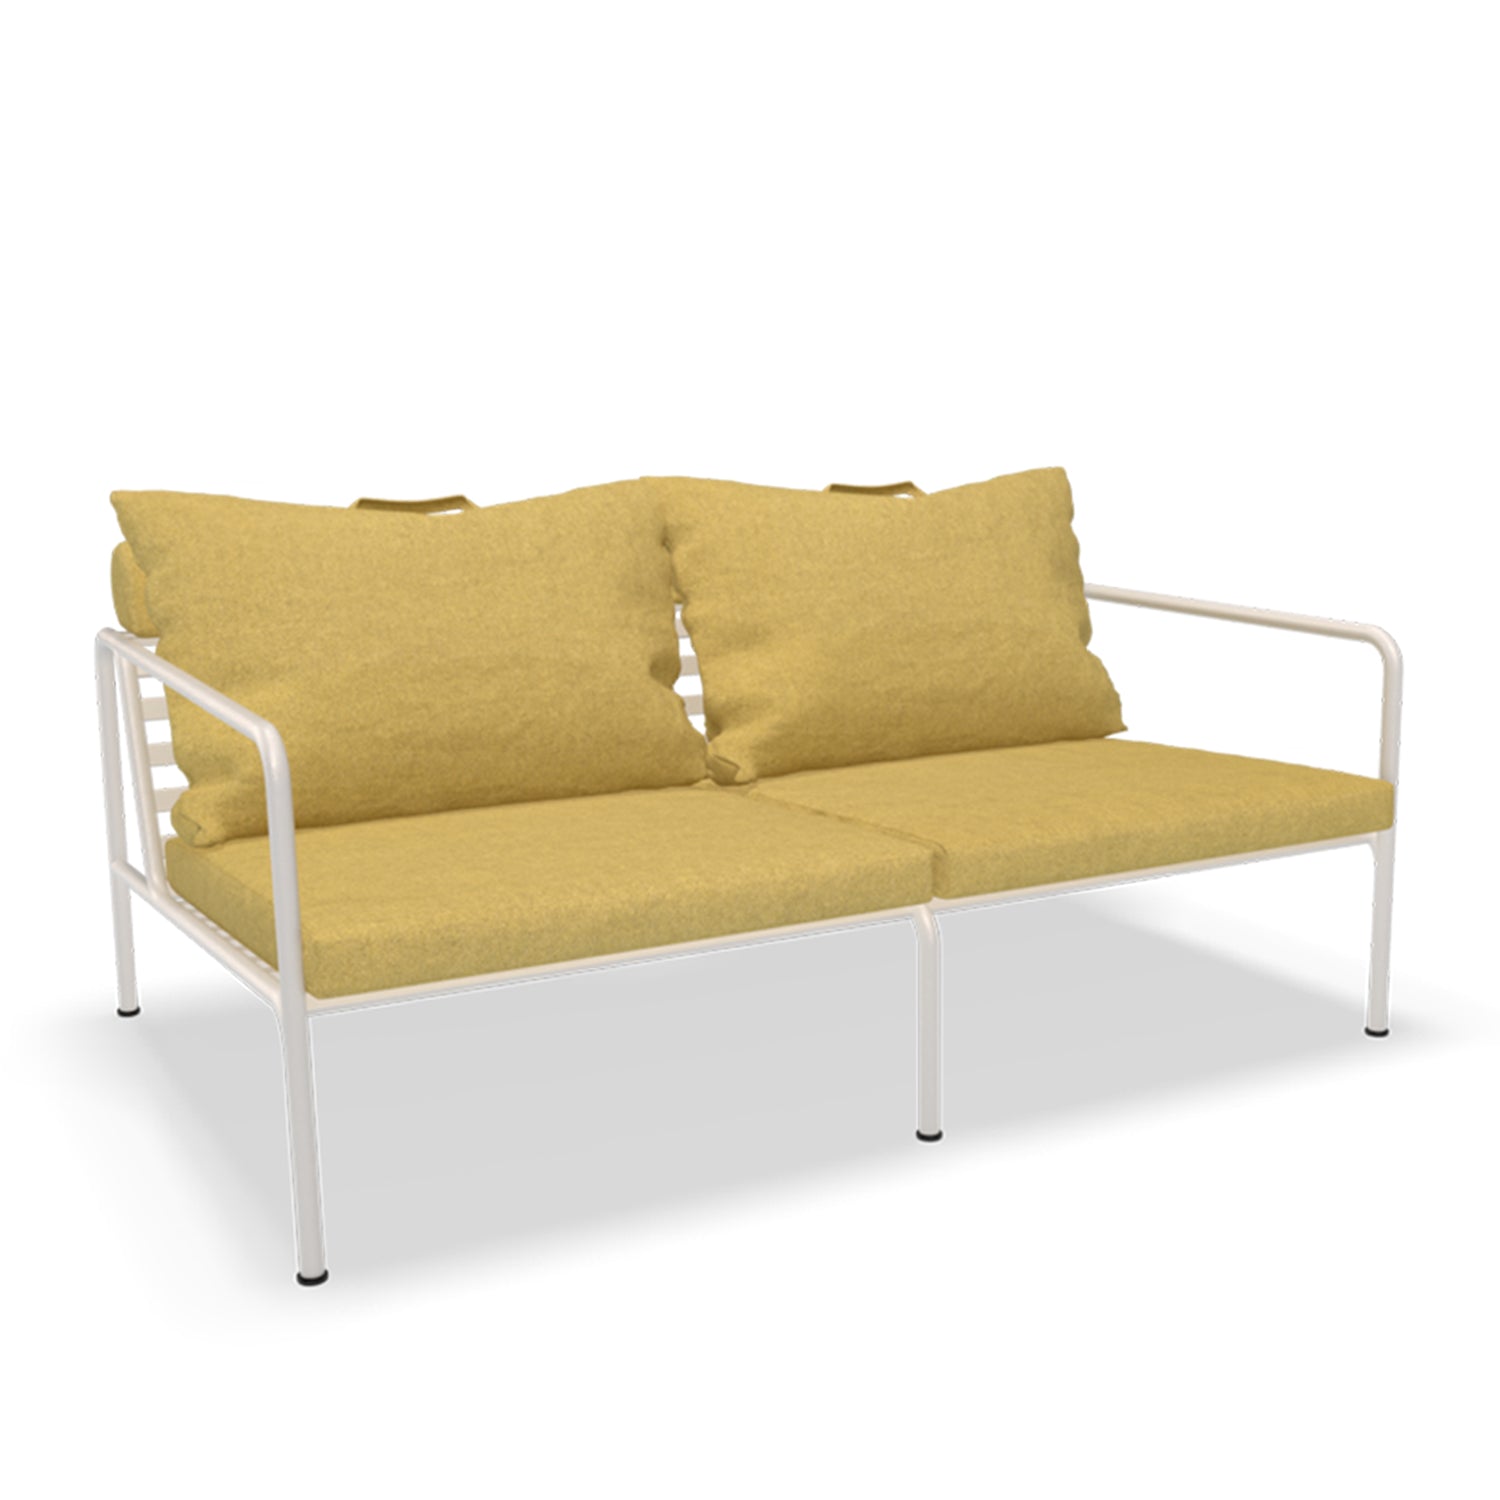 Avon 2 Seater Sofa - The Design Choice